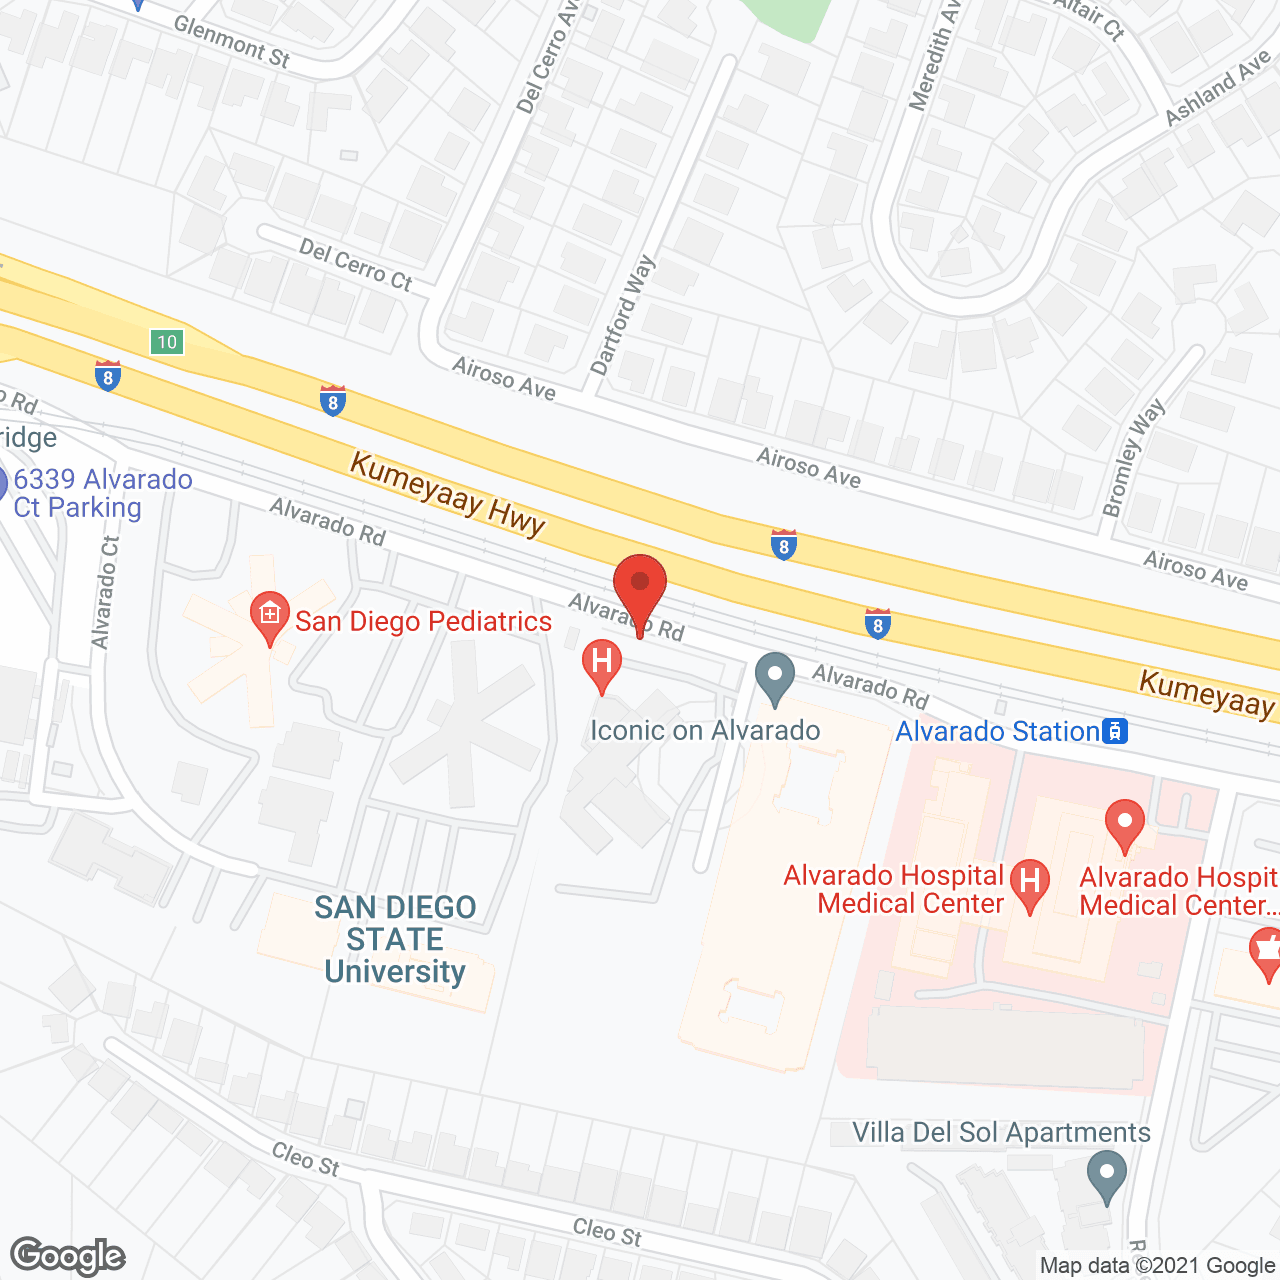 Alvarado Convalescent Hospital in google map